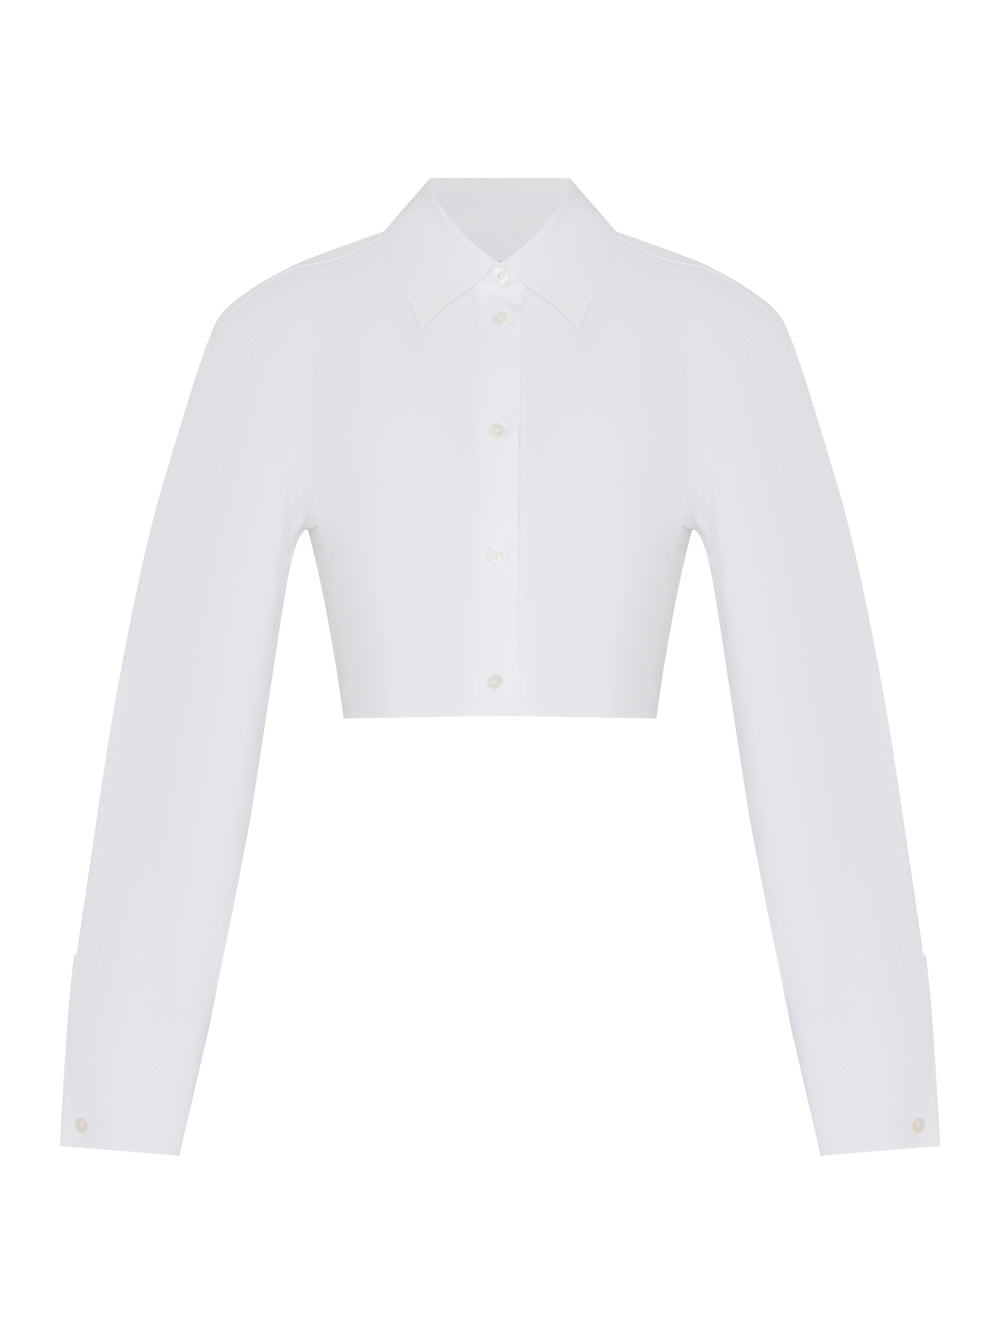 Long Sleeve Shirt With Boning At Waist (White)Long Sleeve Shirt With Boning At Waist (White)